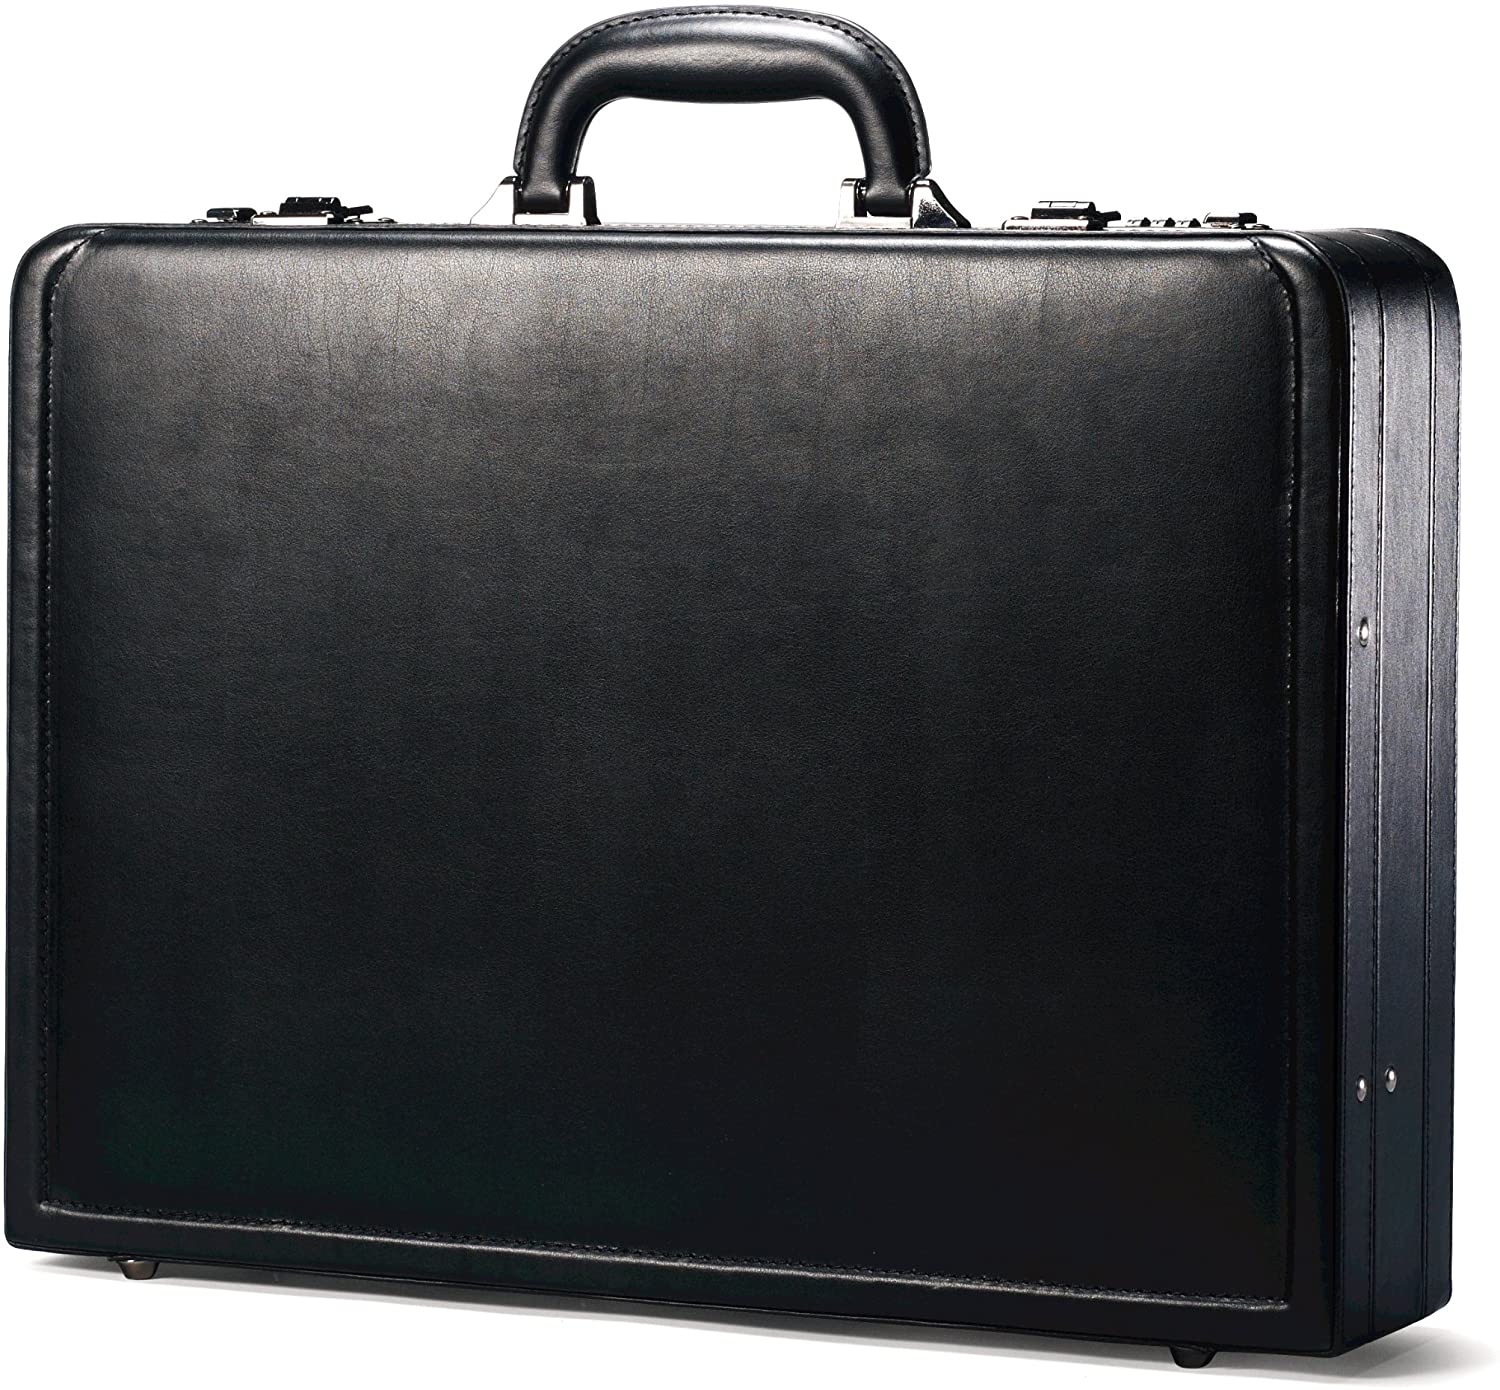 Samsonite Bonded Leather Attaché Briefcase